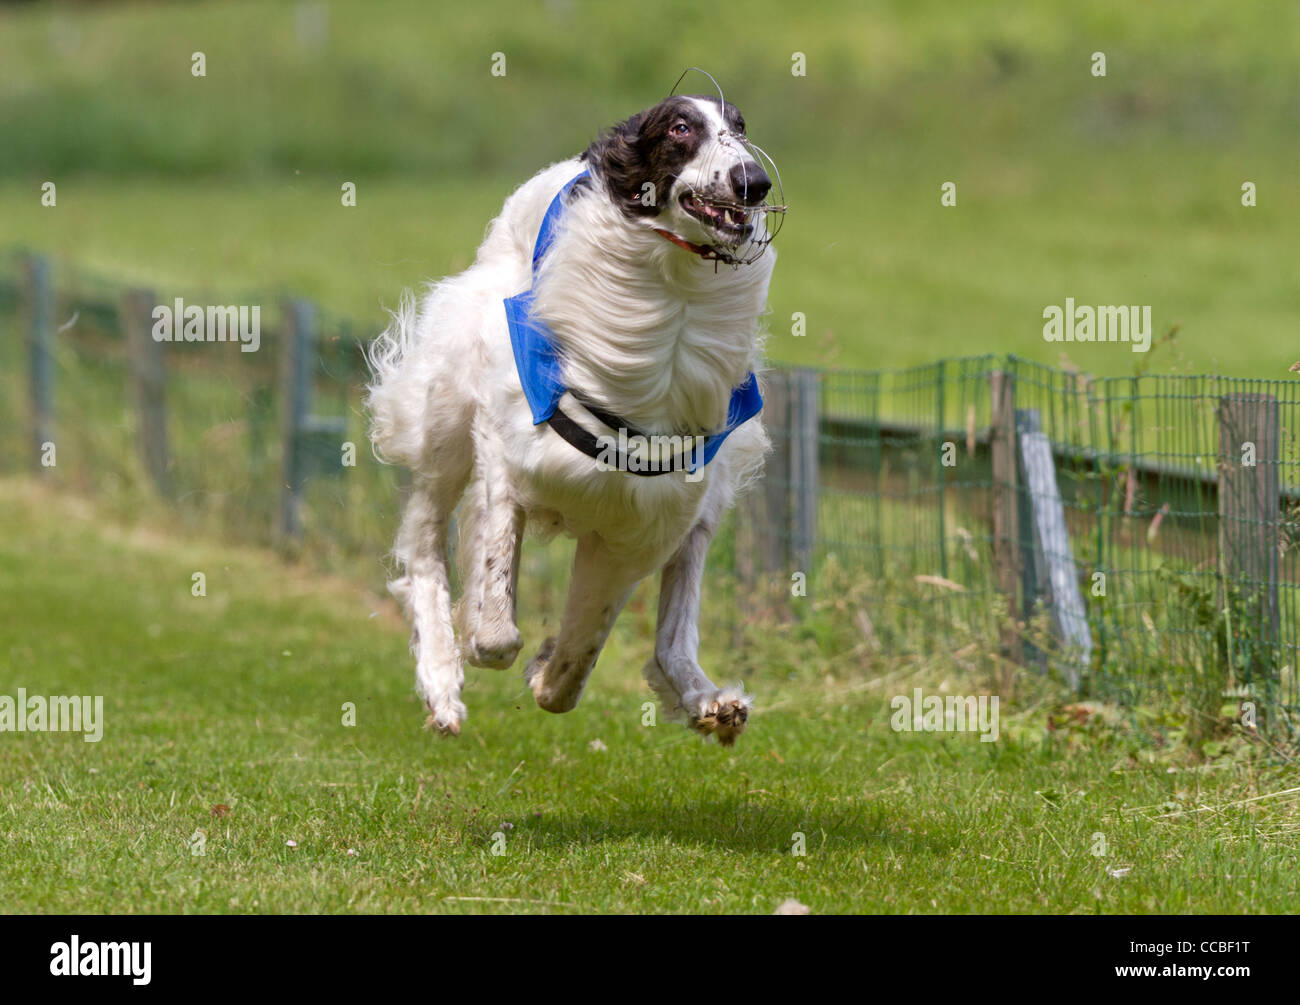 Dog racing Stock Photo